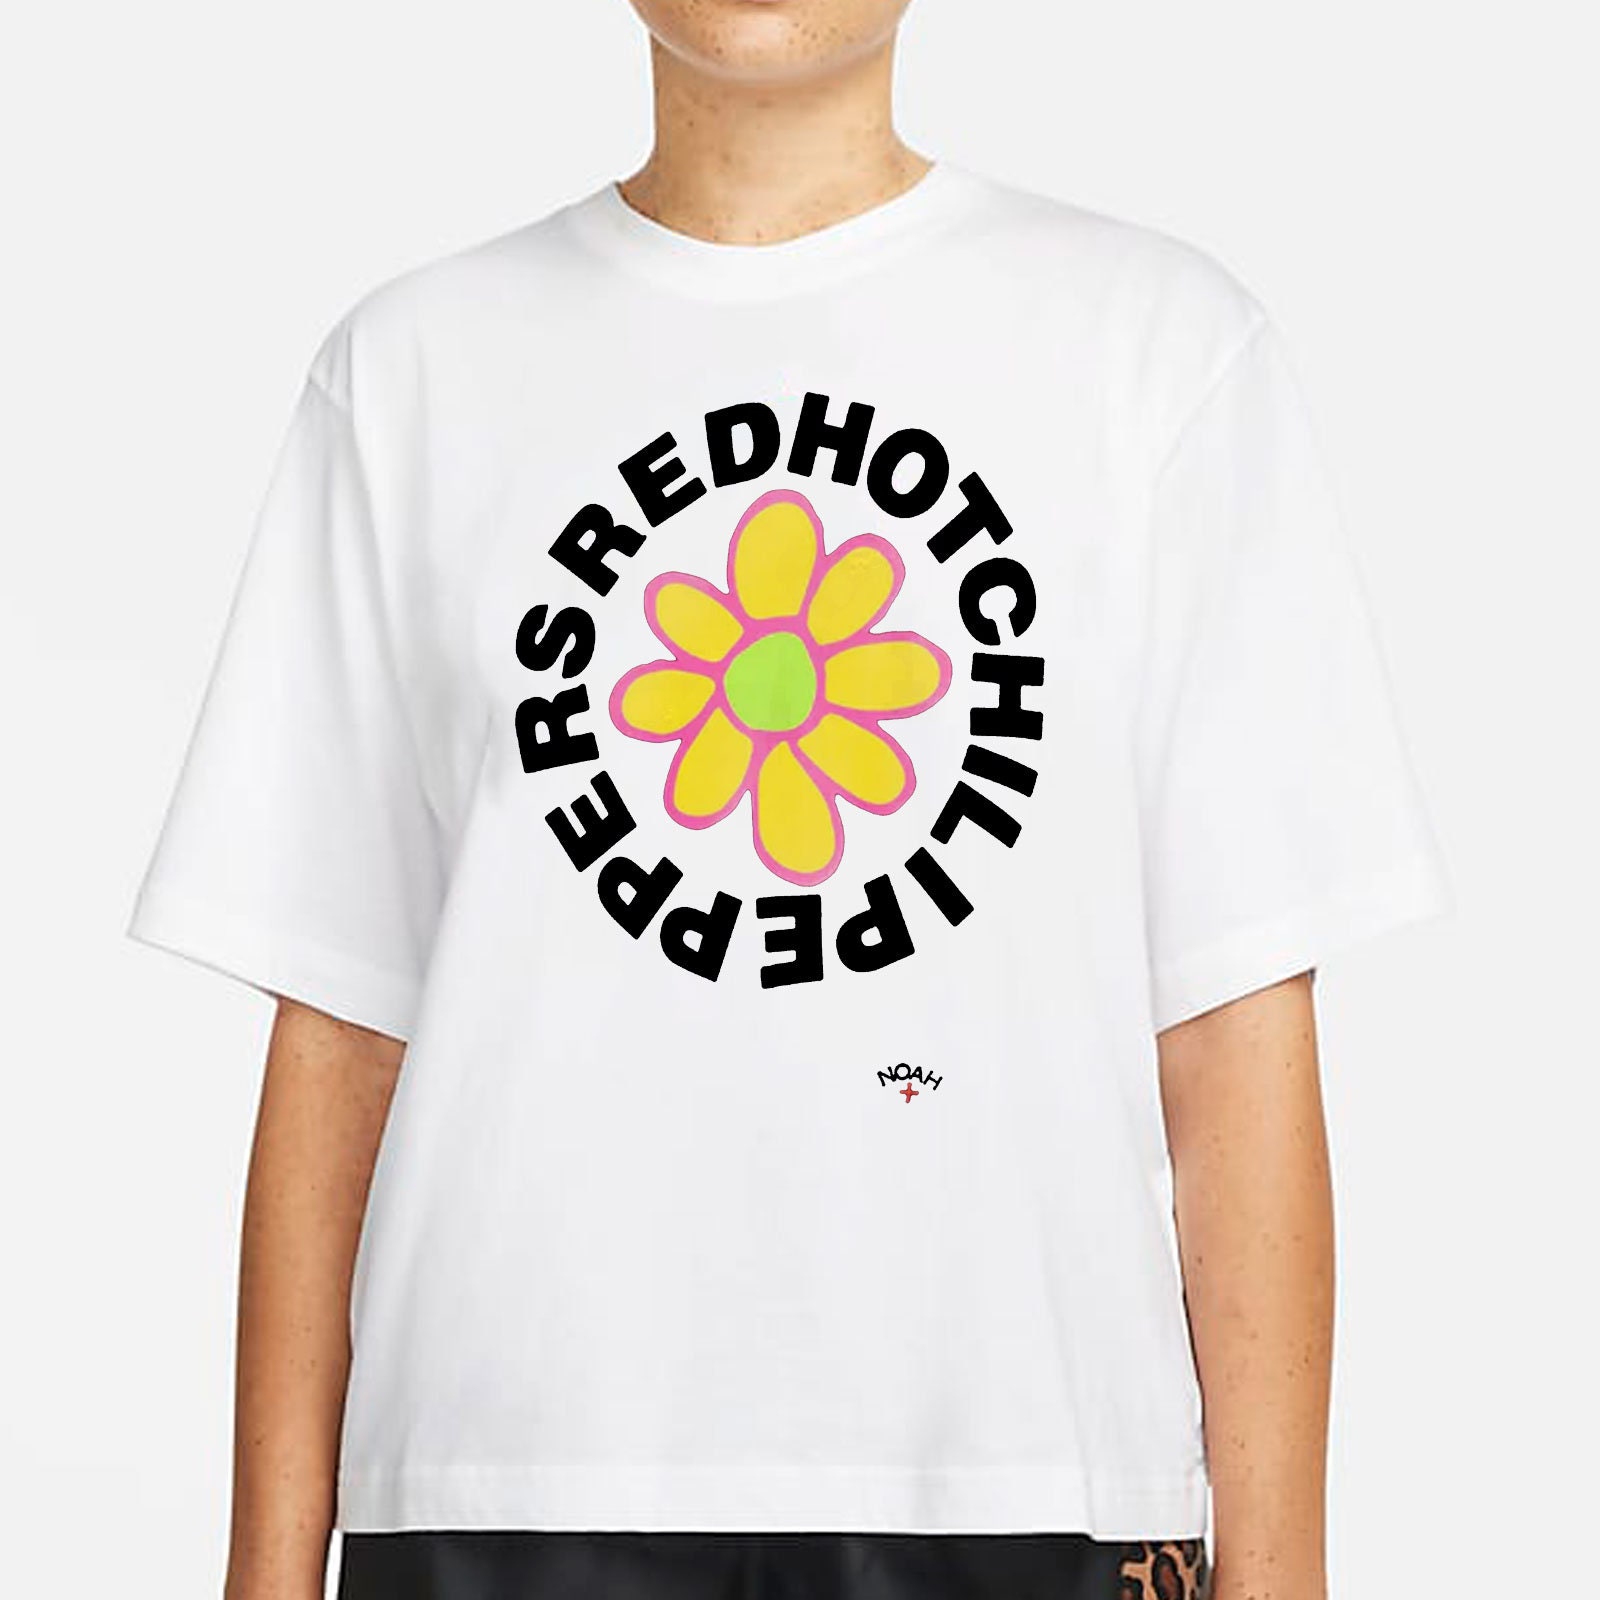 Noah x RHCP Flower Shirt, Noah x RHCP Shirt, Red Hot Chili Peppers x Noah Shirt